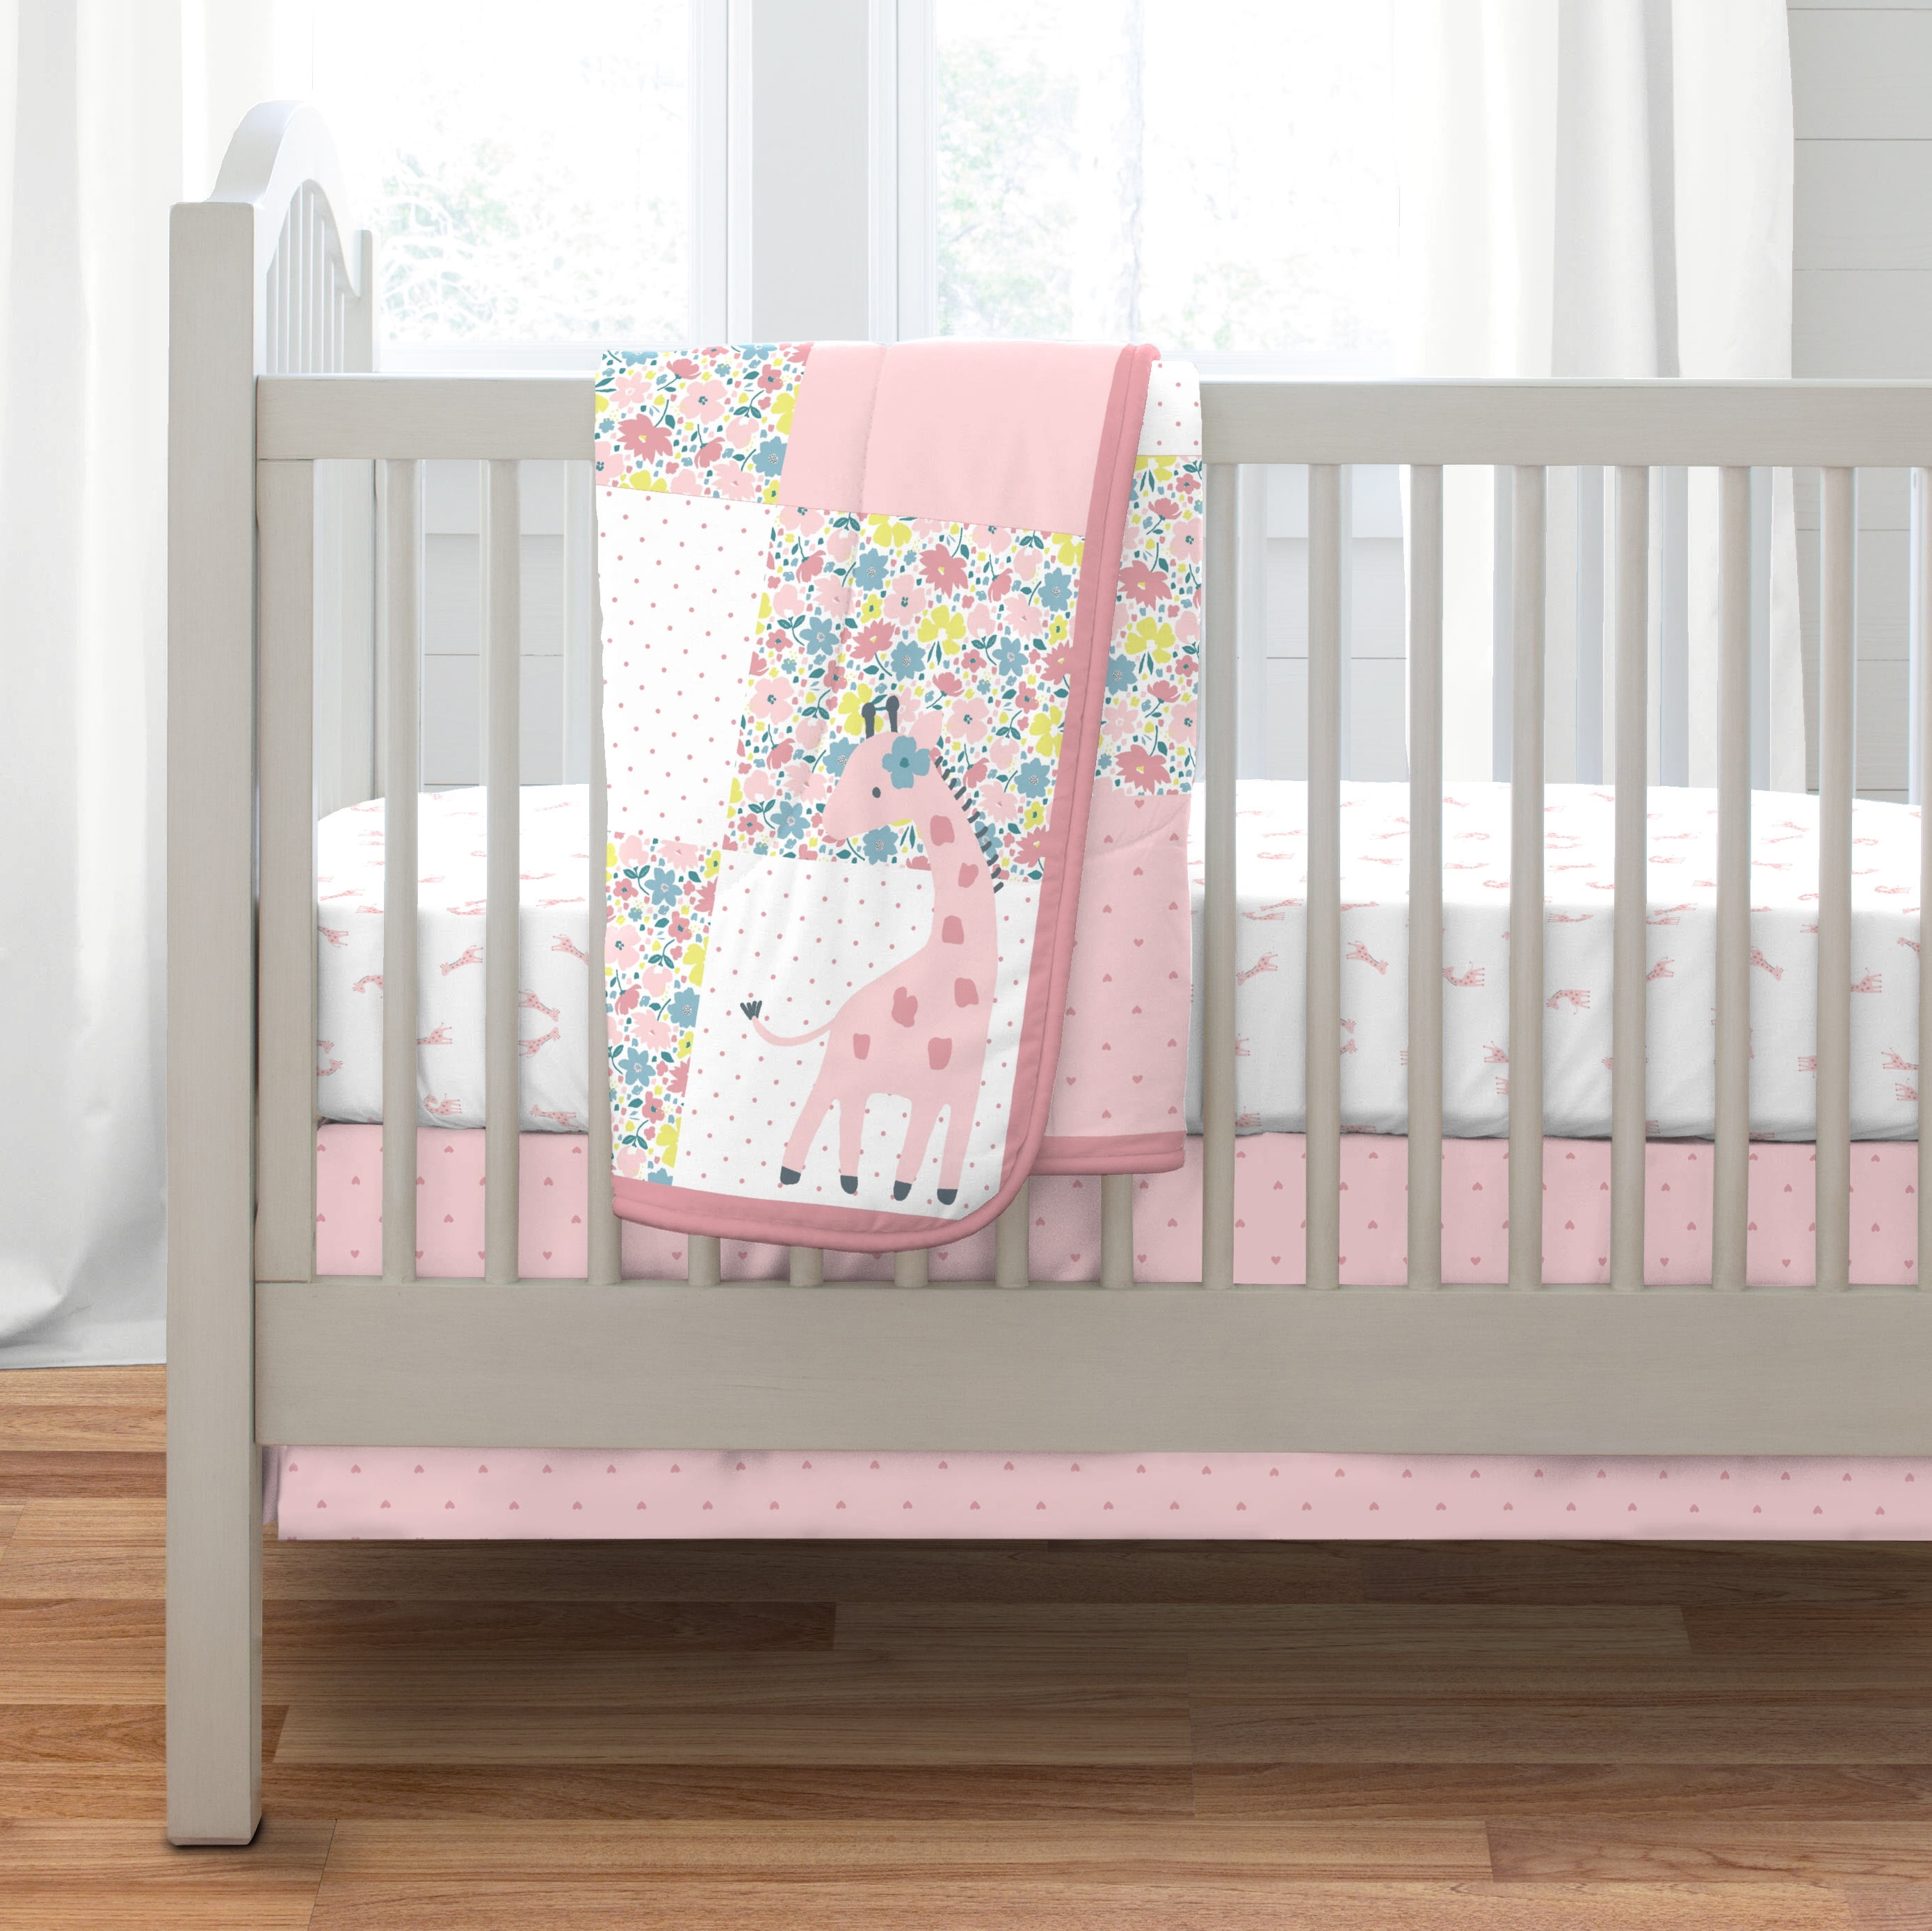 Giraffe Baby Crib Toy Wrap Around Crib Rail or Stroller Carriage or Car Seat 